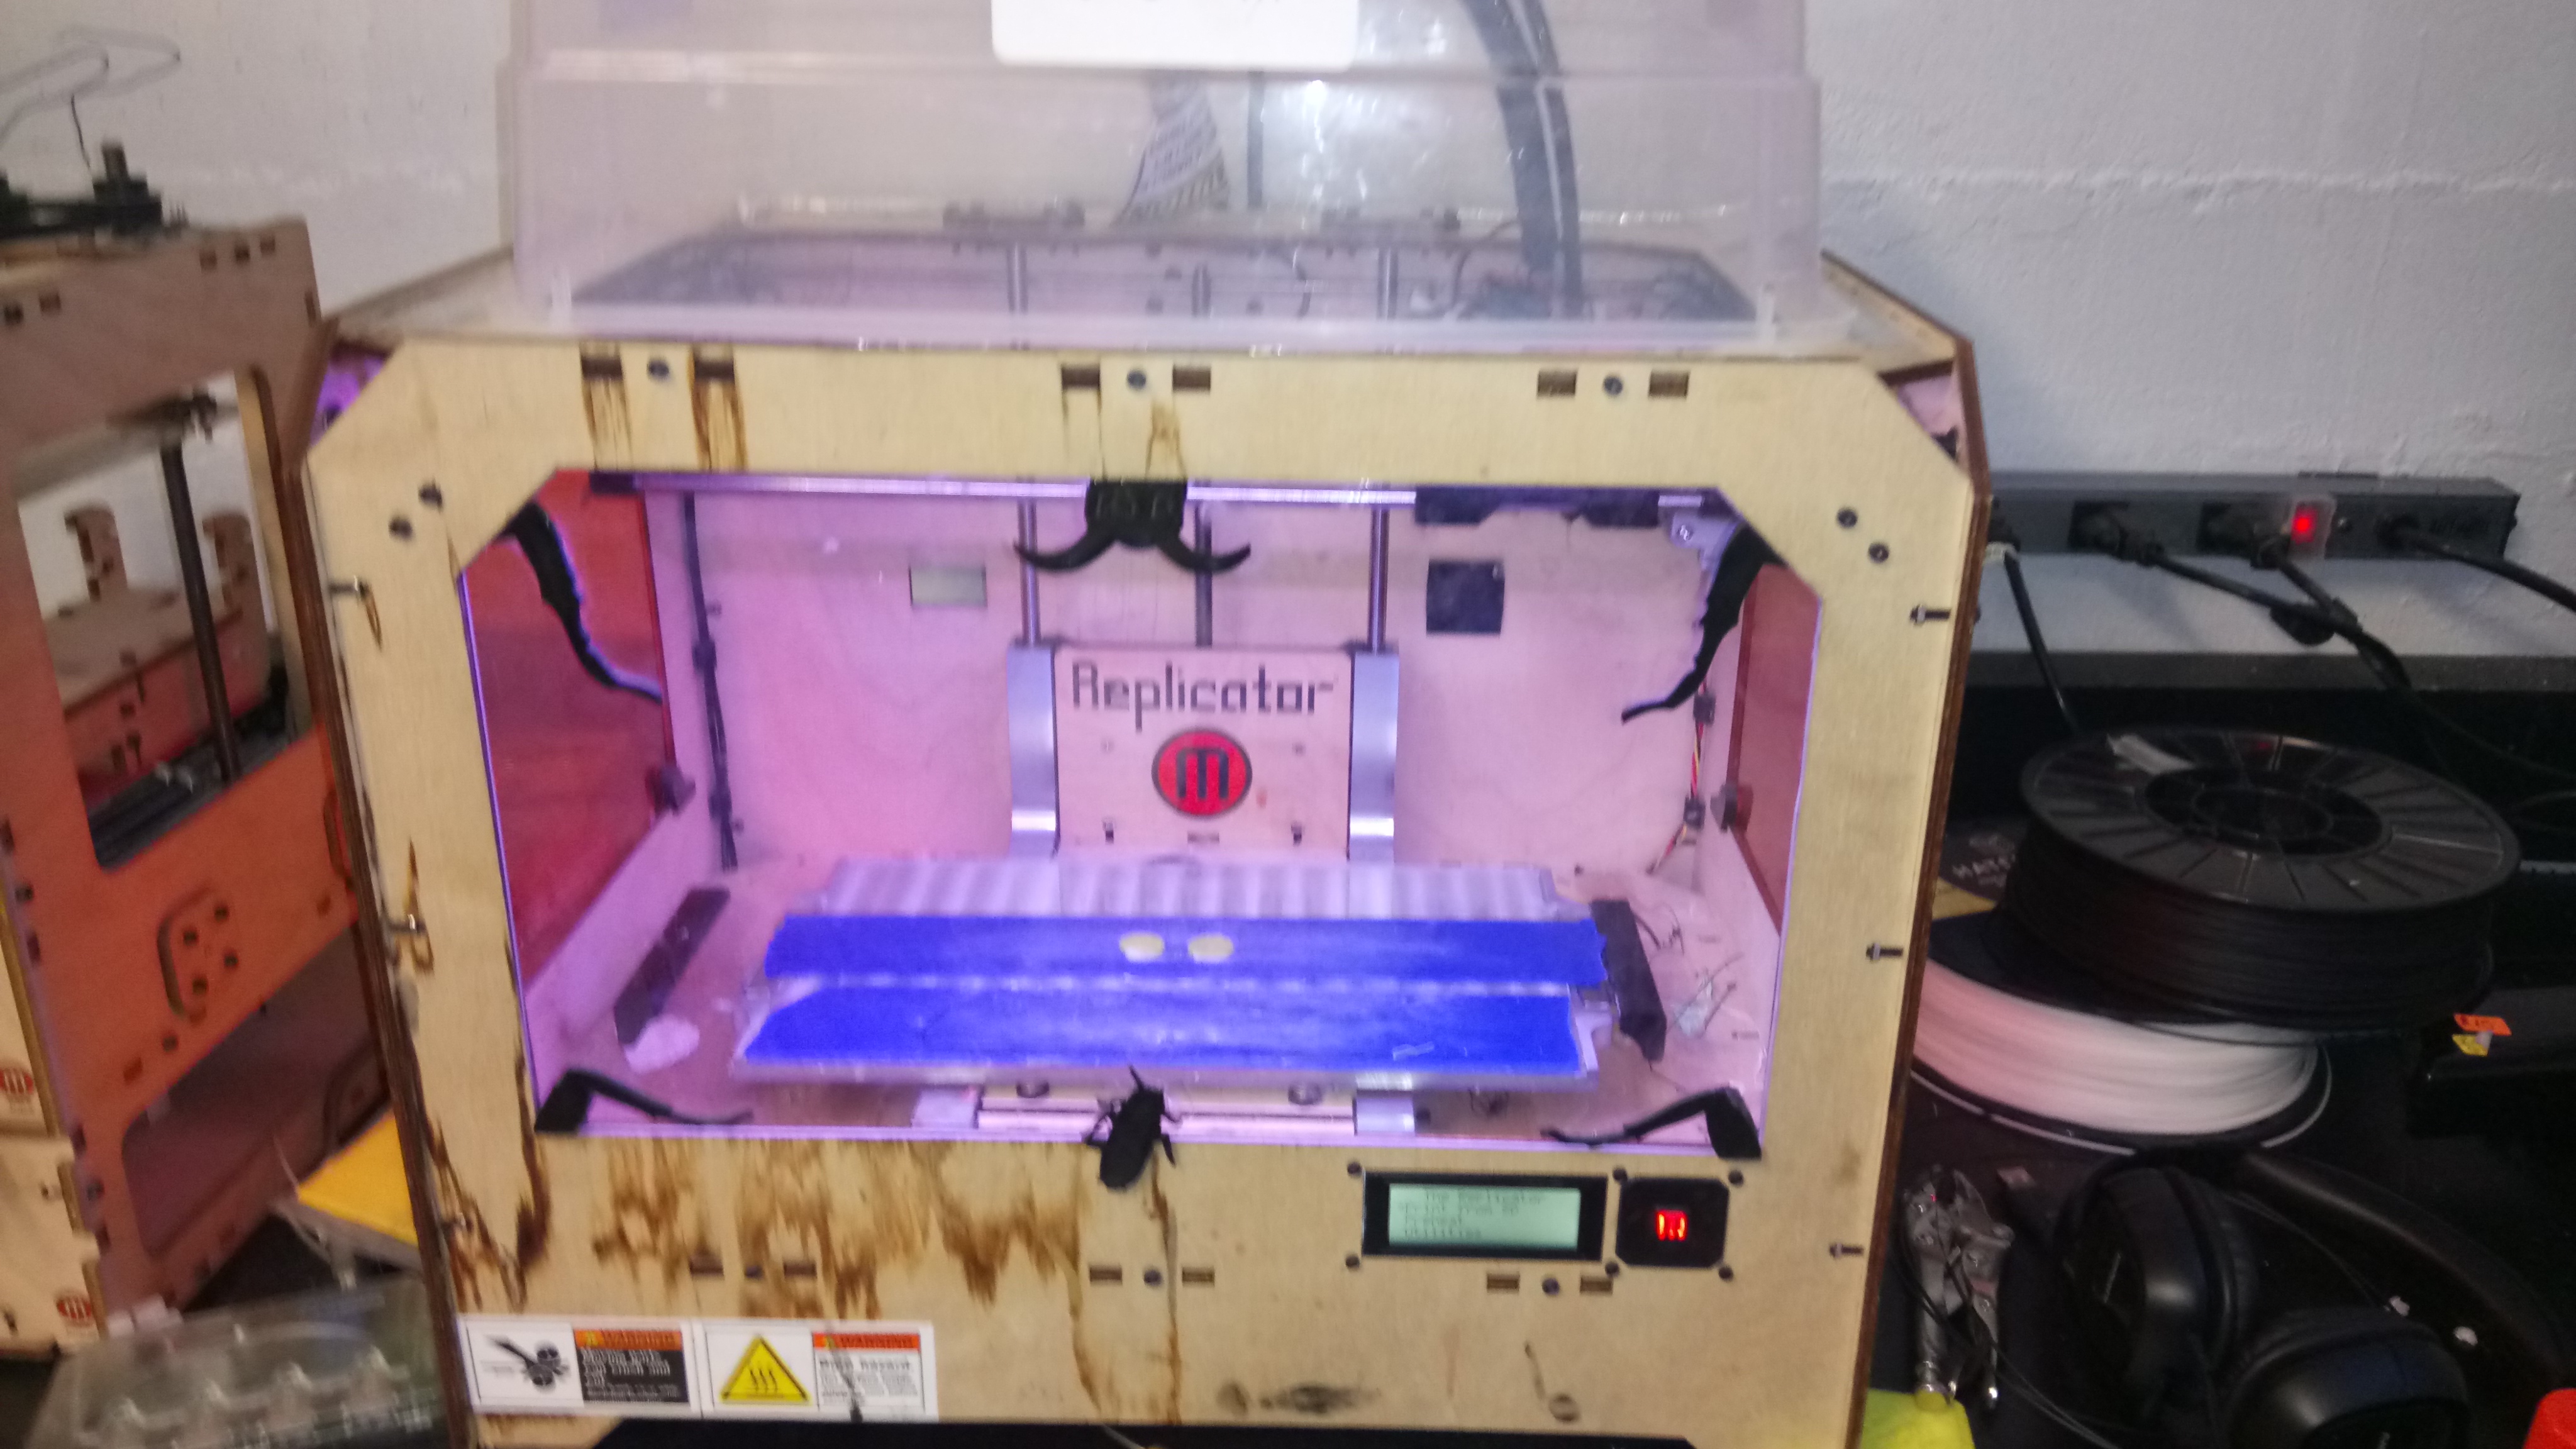 The Makerbot Replicator .